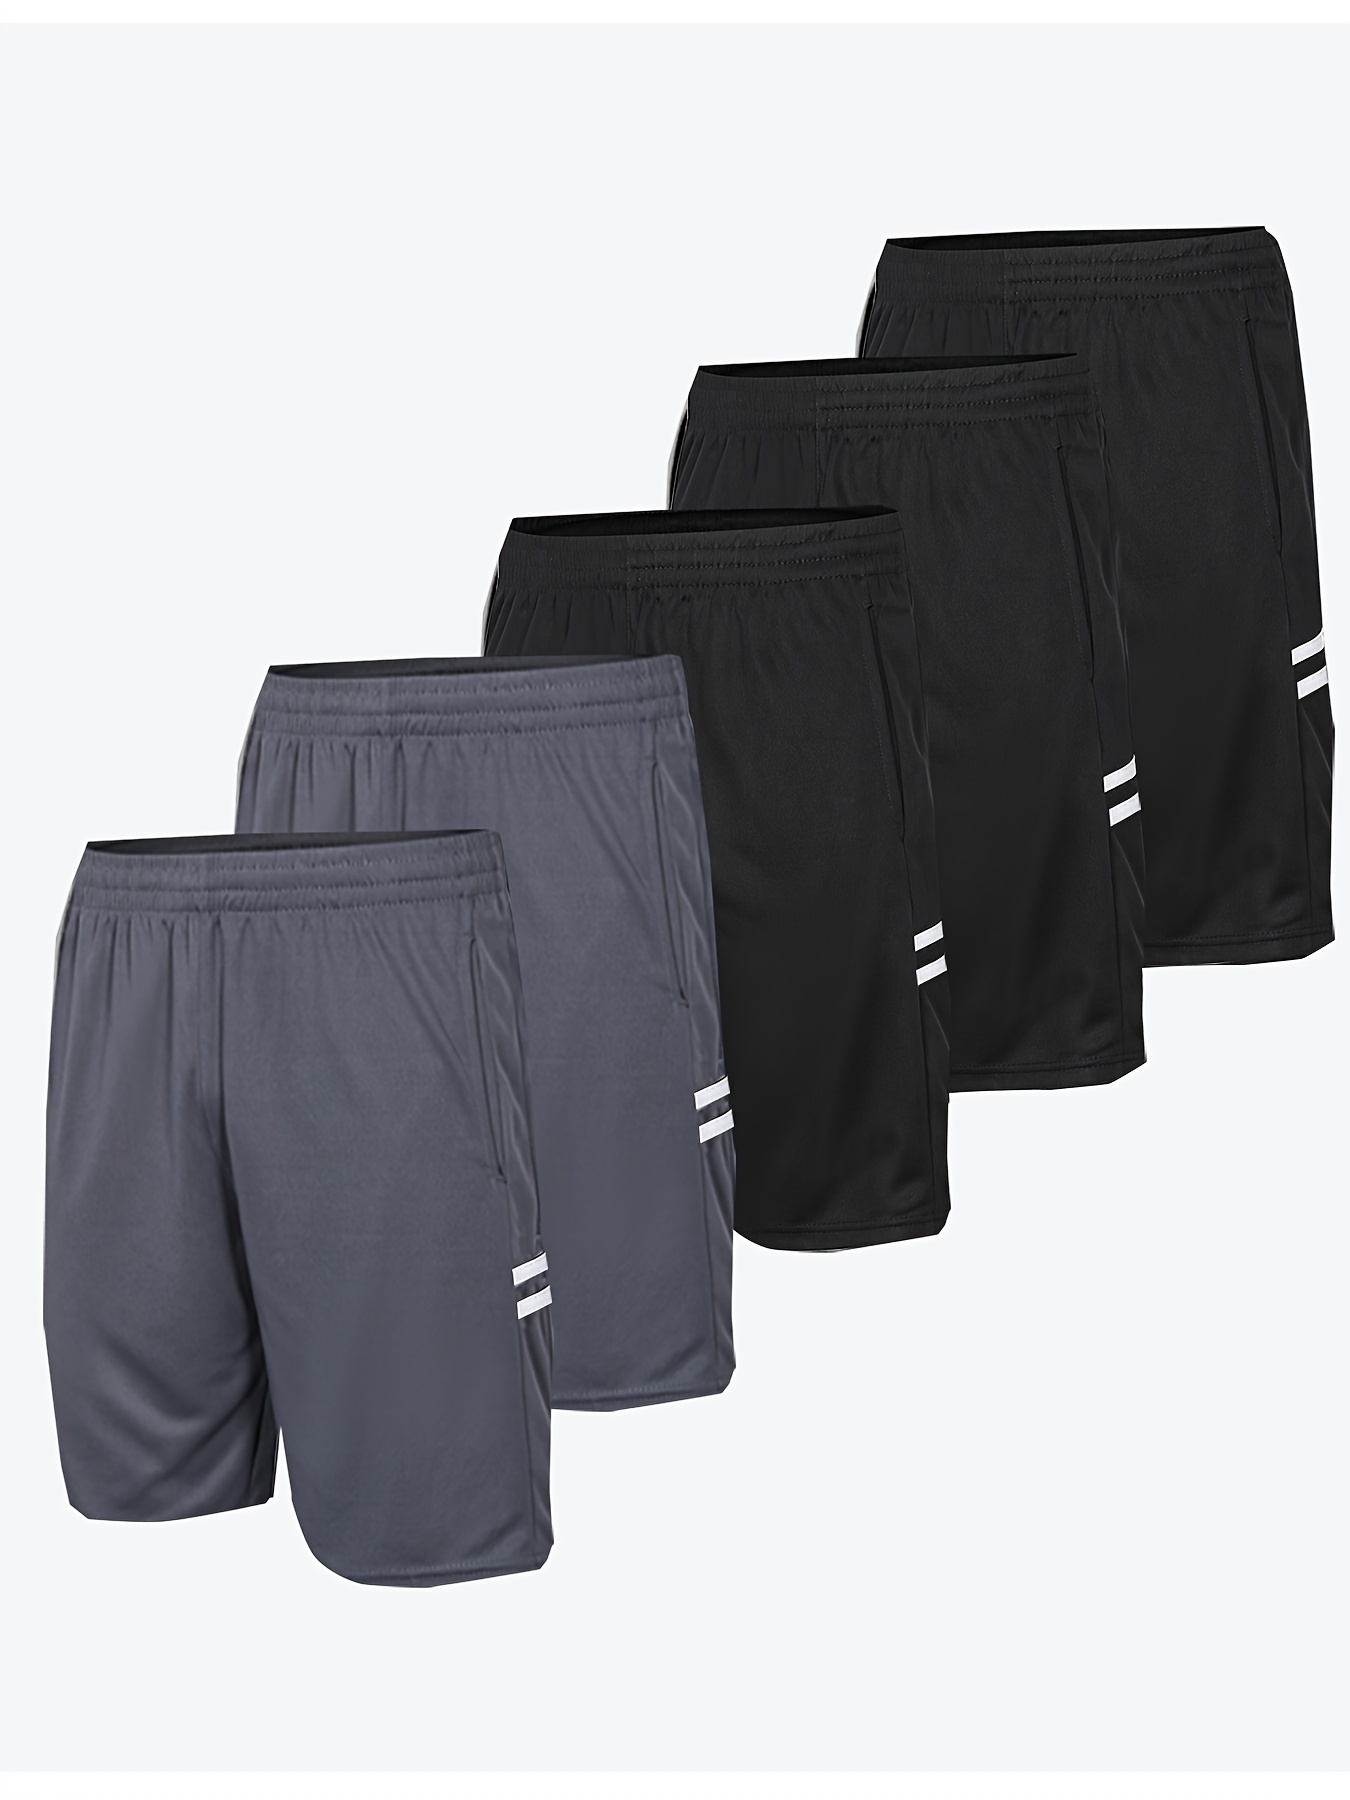 Mens Plain Shorts Summer Fitness Sports Running Short Pants